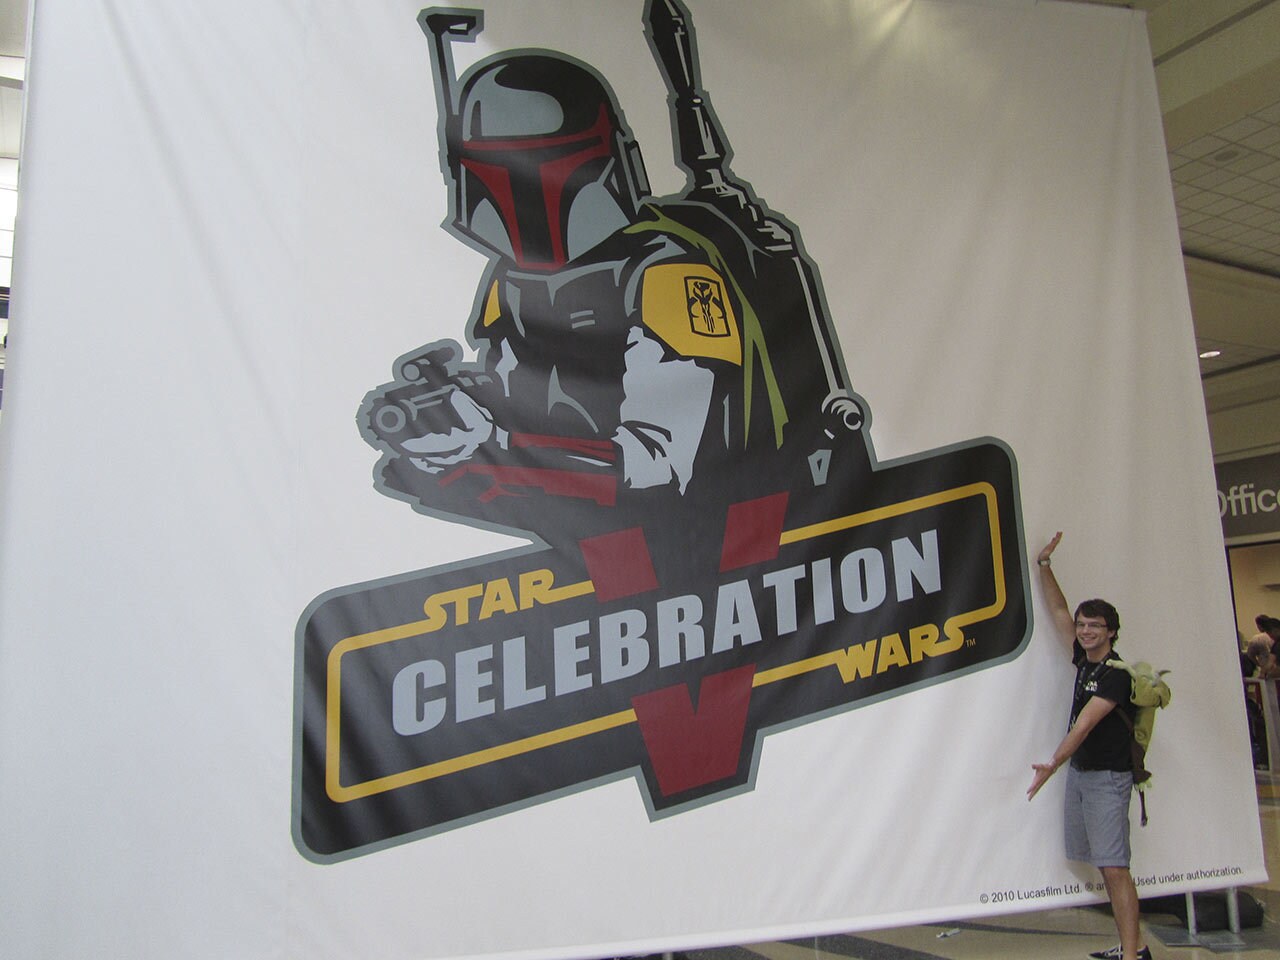 Dustin posing infront of the Star Wars: Celebration V logo